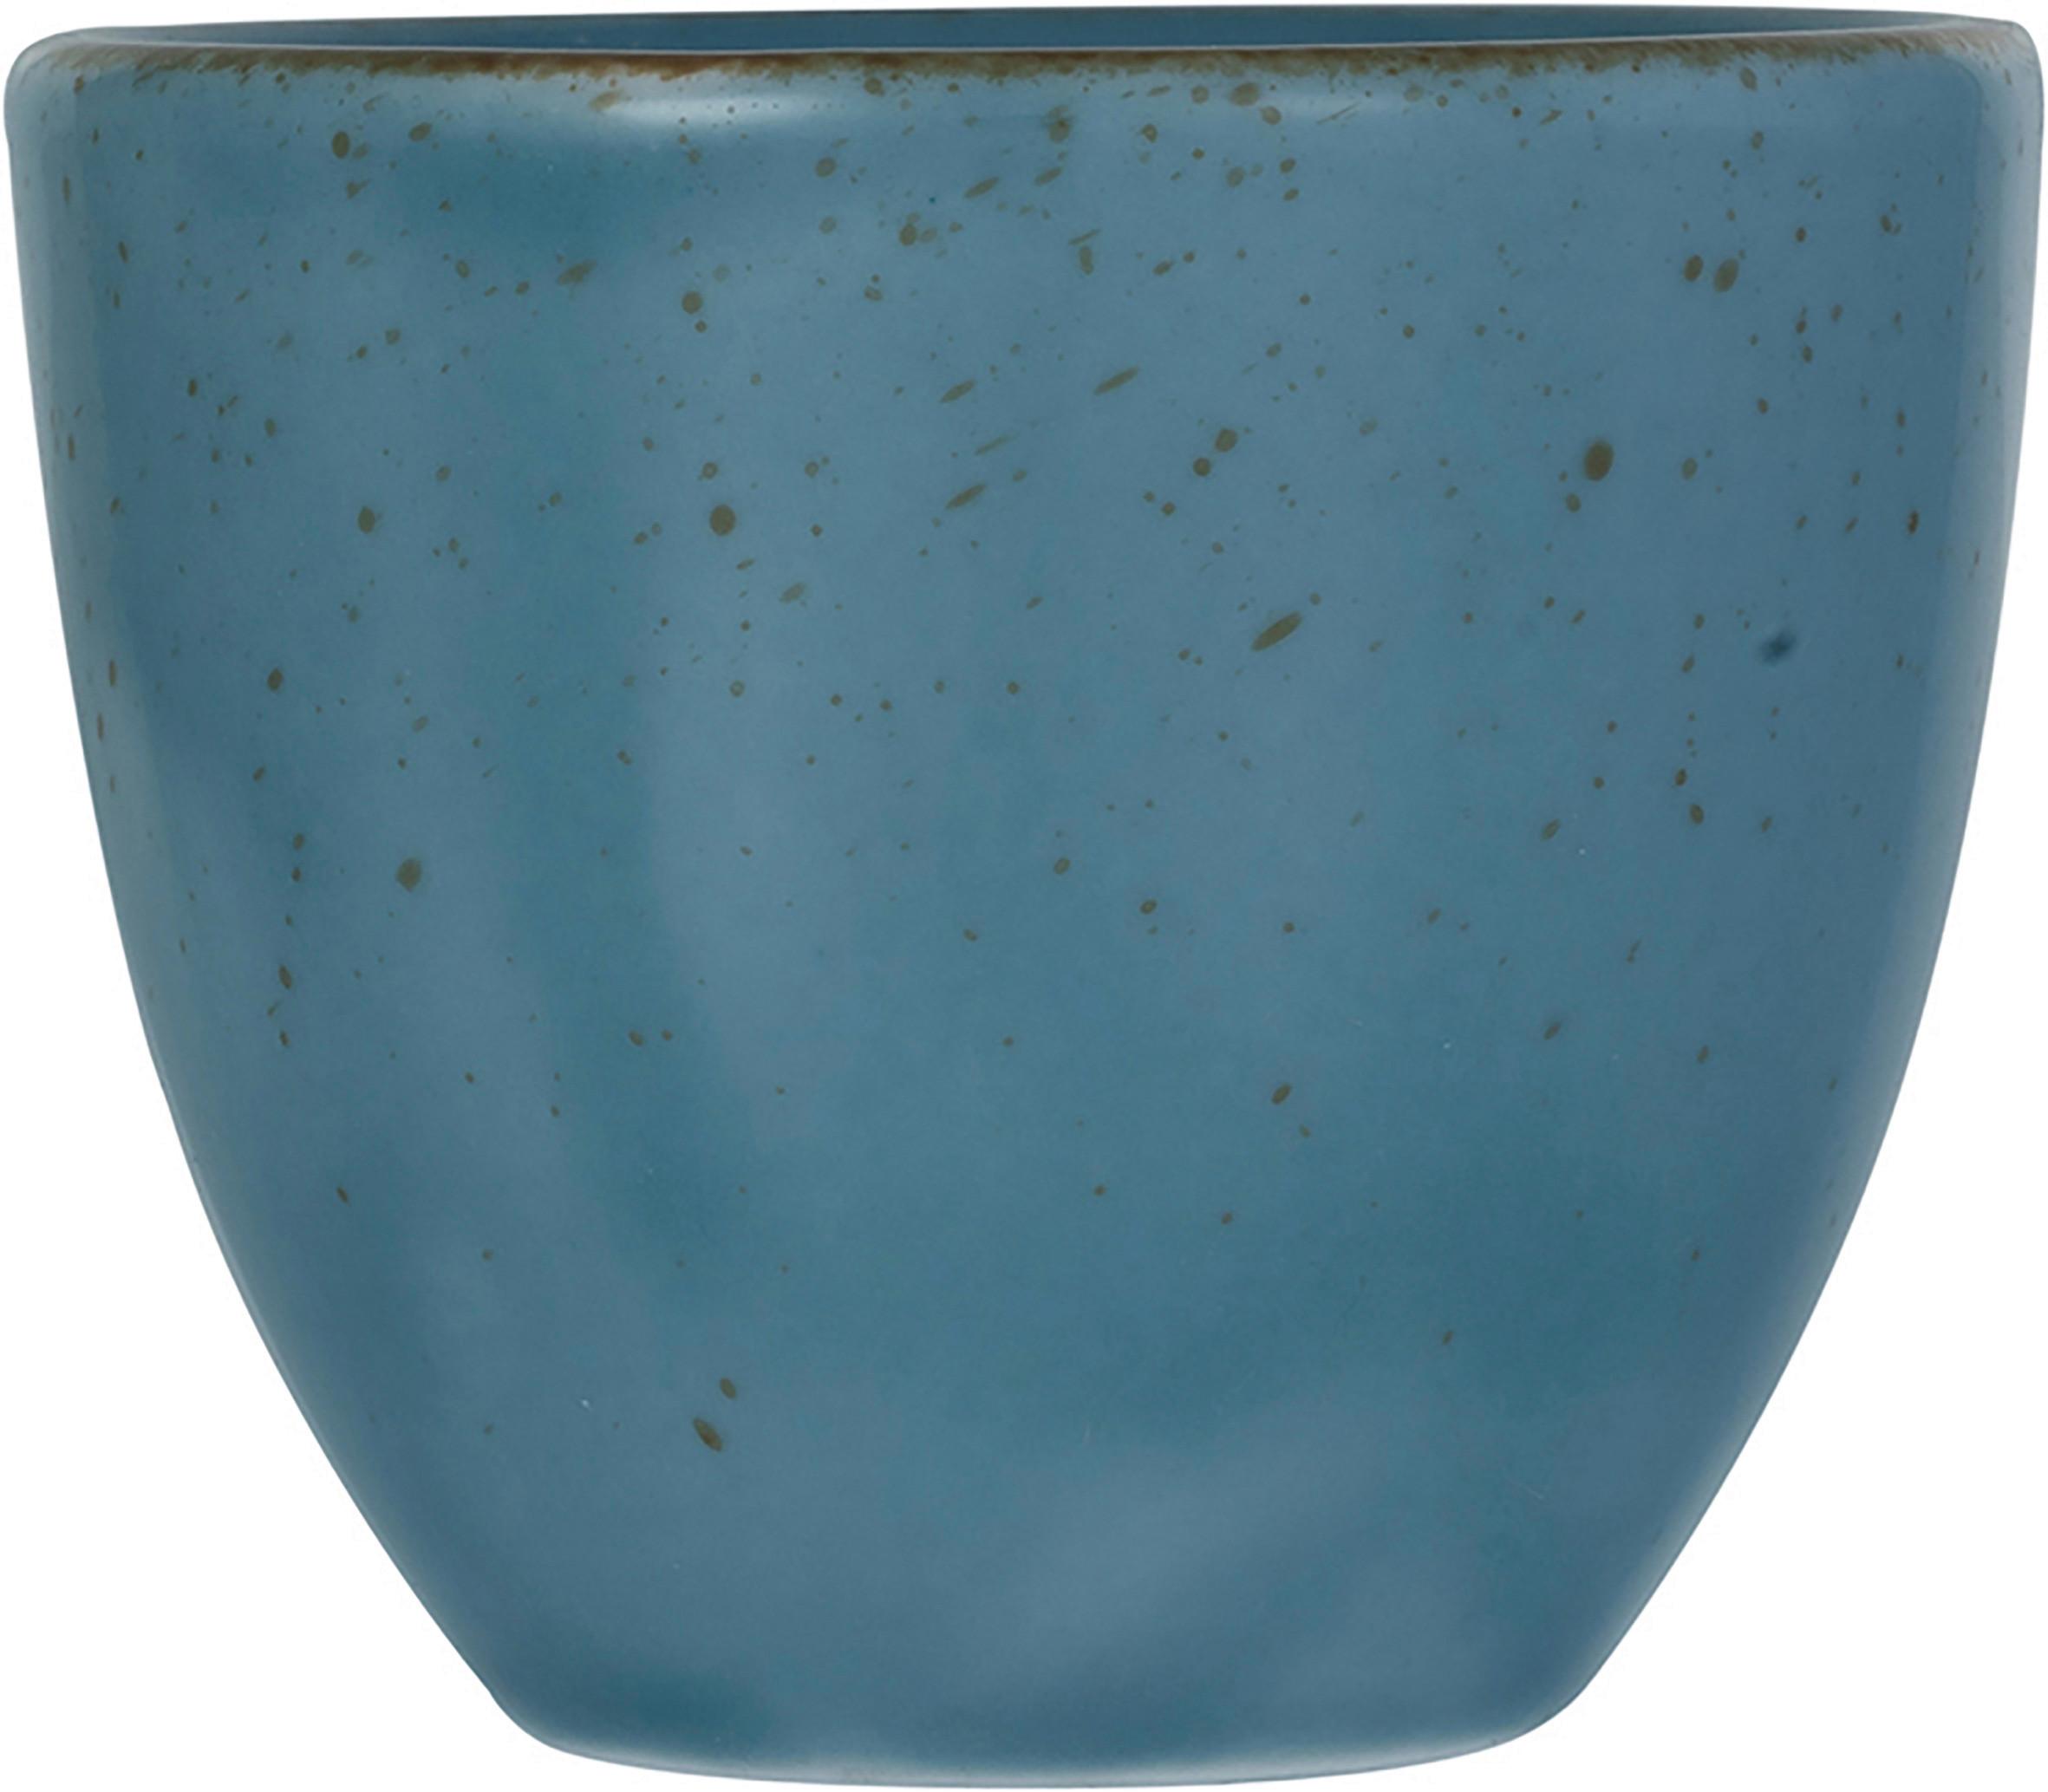 Espressotasse Capri aus Porzellan ca. 80ml - Blau, MODERN, Keramik (6,5/6,5/6cm) - Premium Living